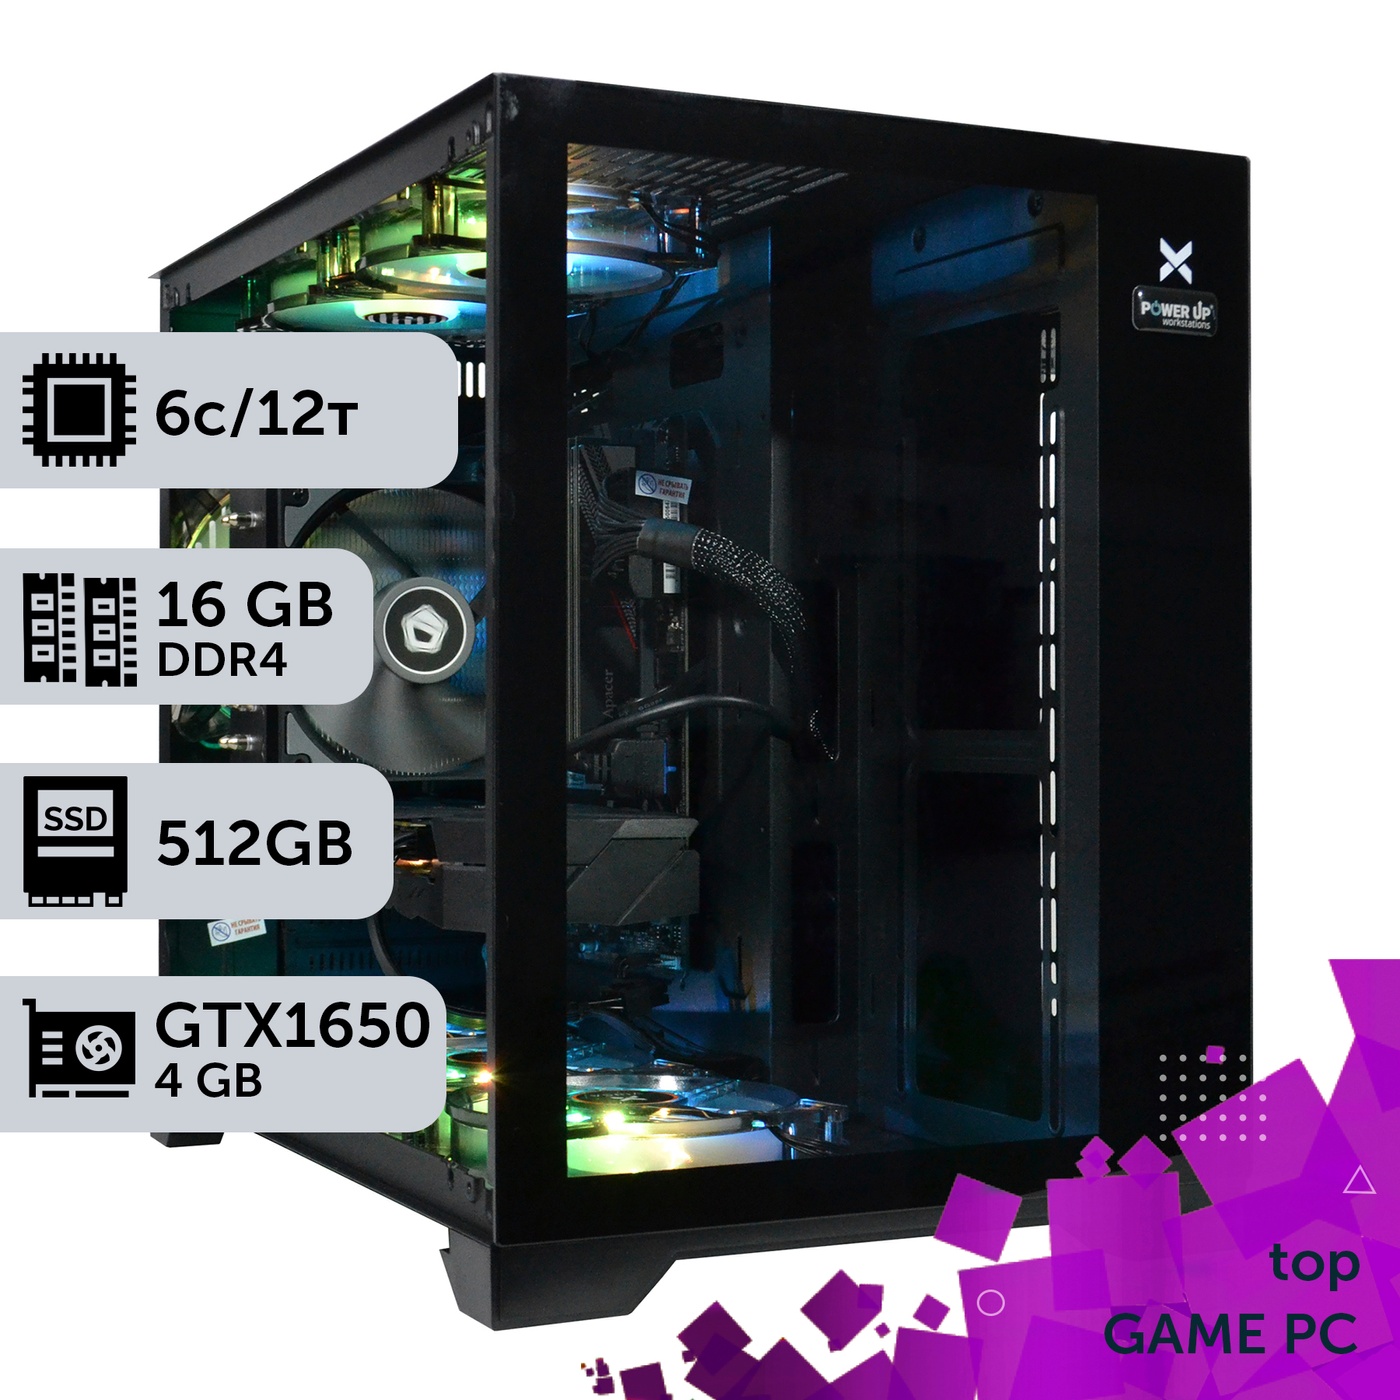 Игровой компьютер GamePC TOP #115 Core i5 12400F/16 GB/SSD 512GB/GeForce GTX 1650 4GB